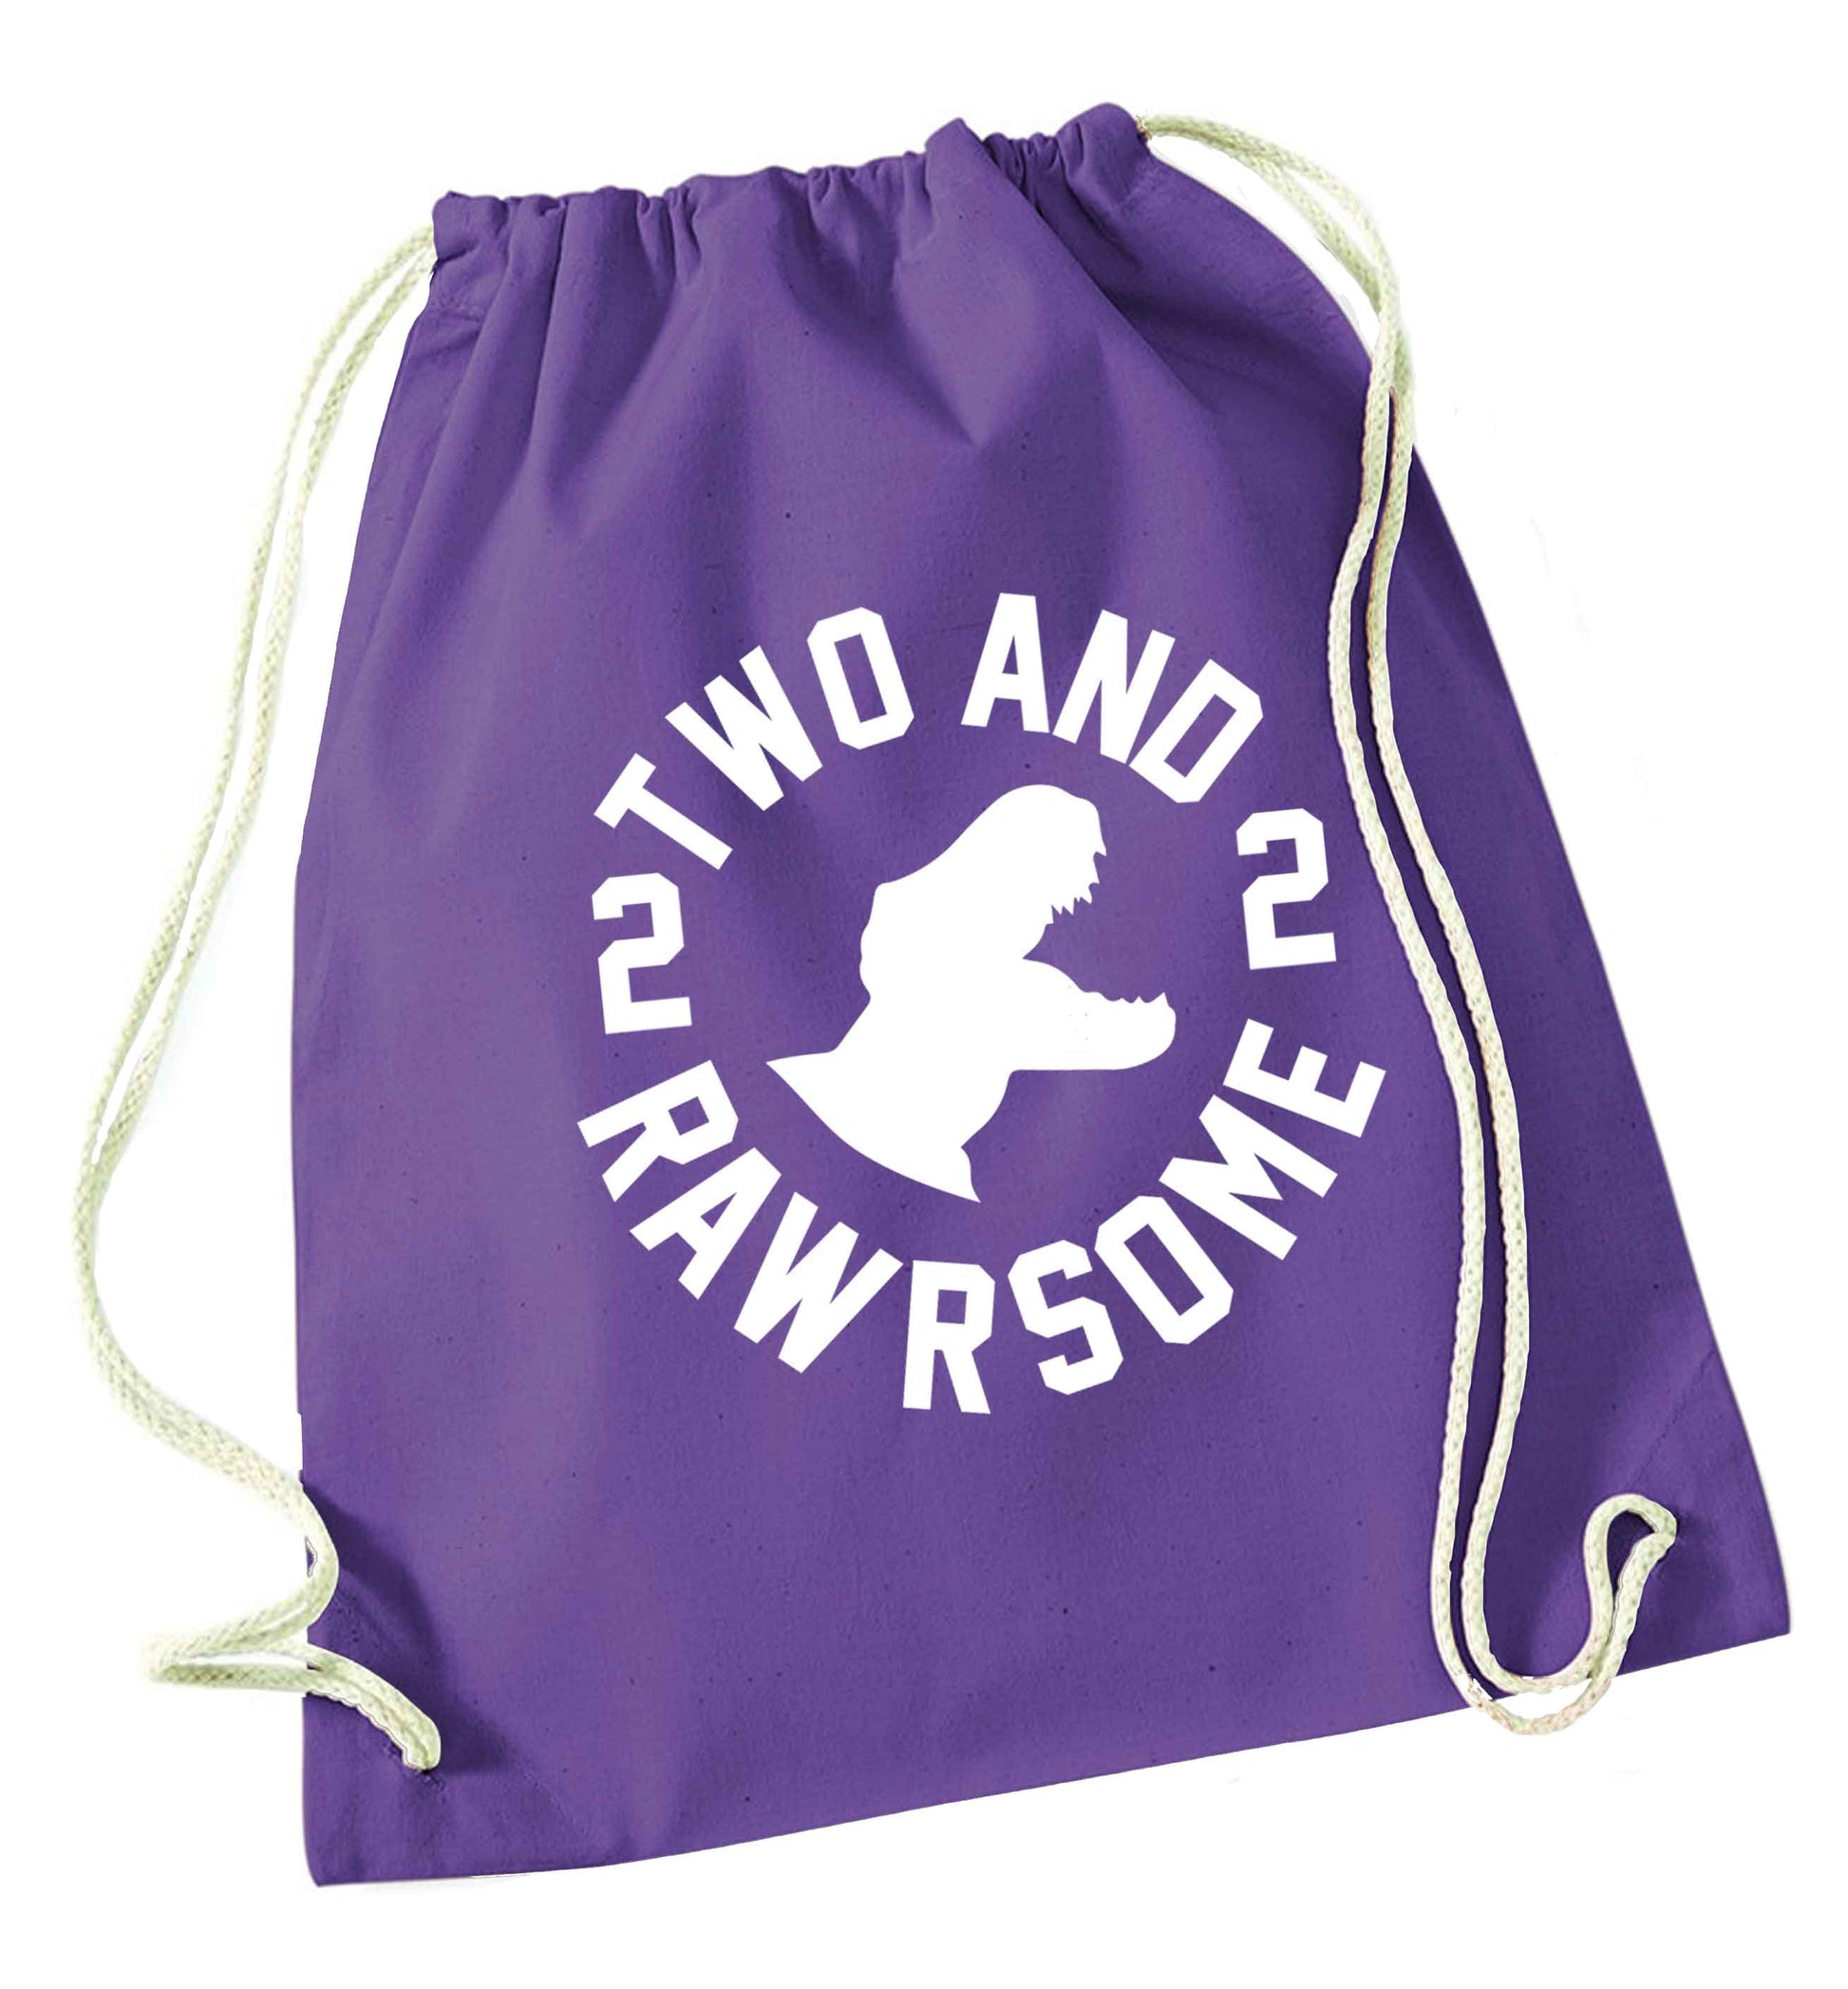 Two and rawrsome purple drawstring bag